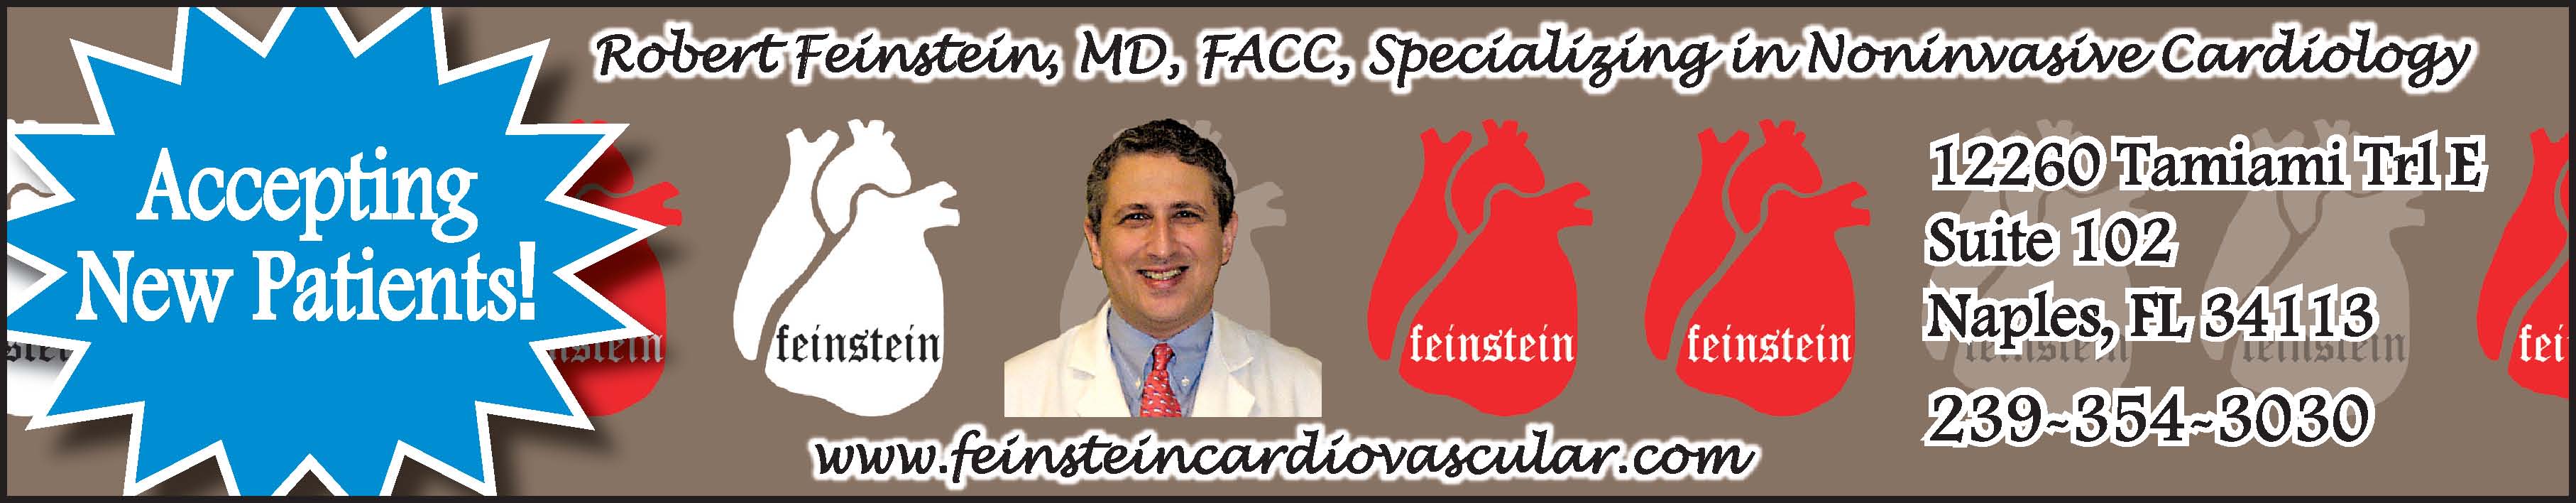 Feinstein Cardiovascular